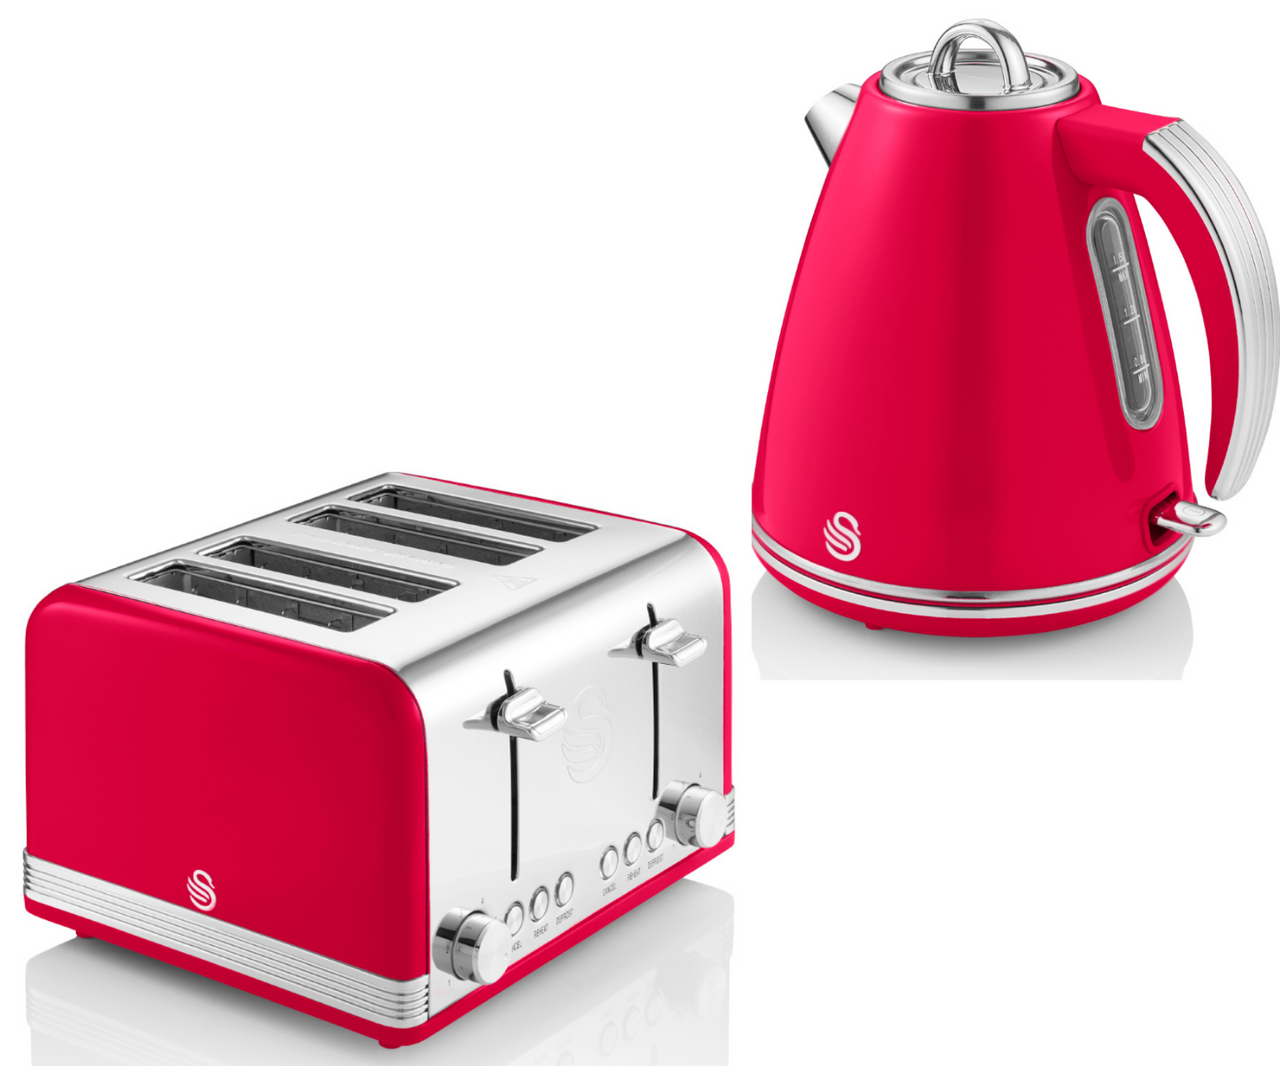 Swan Retro Jug Kettle & 4 Slice Toaster Matching Kitchen Set in Red - 2 Yr G`tee